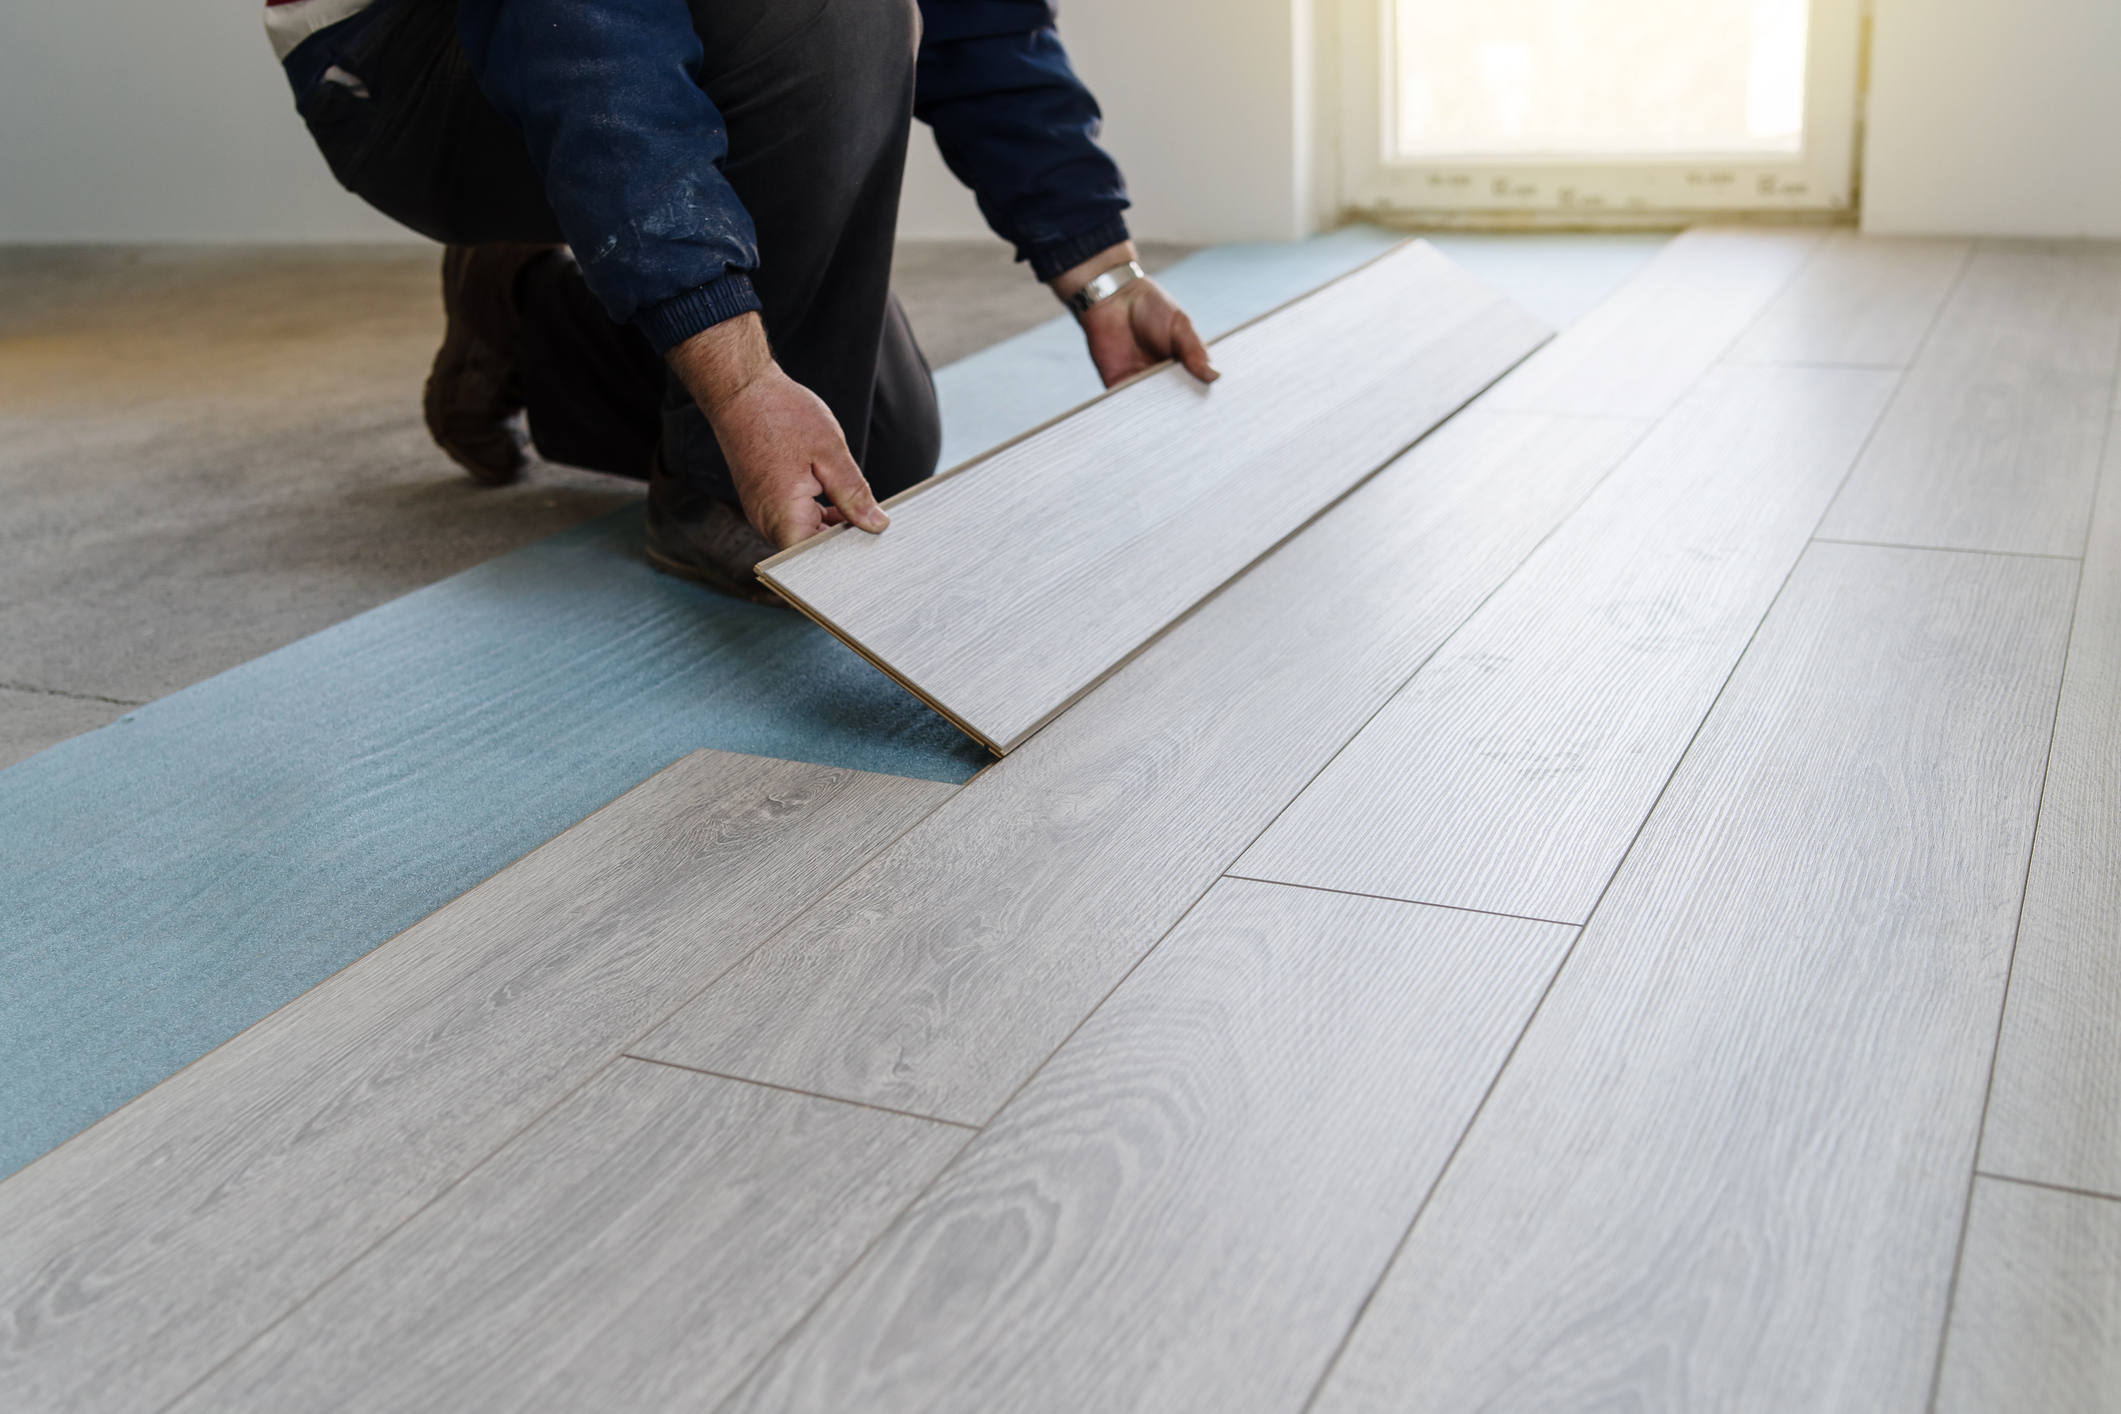 Temporary Flooring Ideas, Can You Lay Waterproof Laminate Over Vinyl Flooring